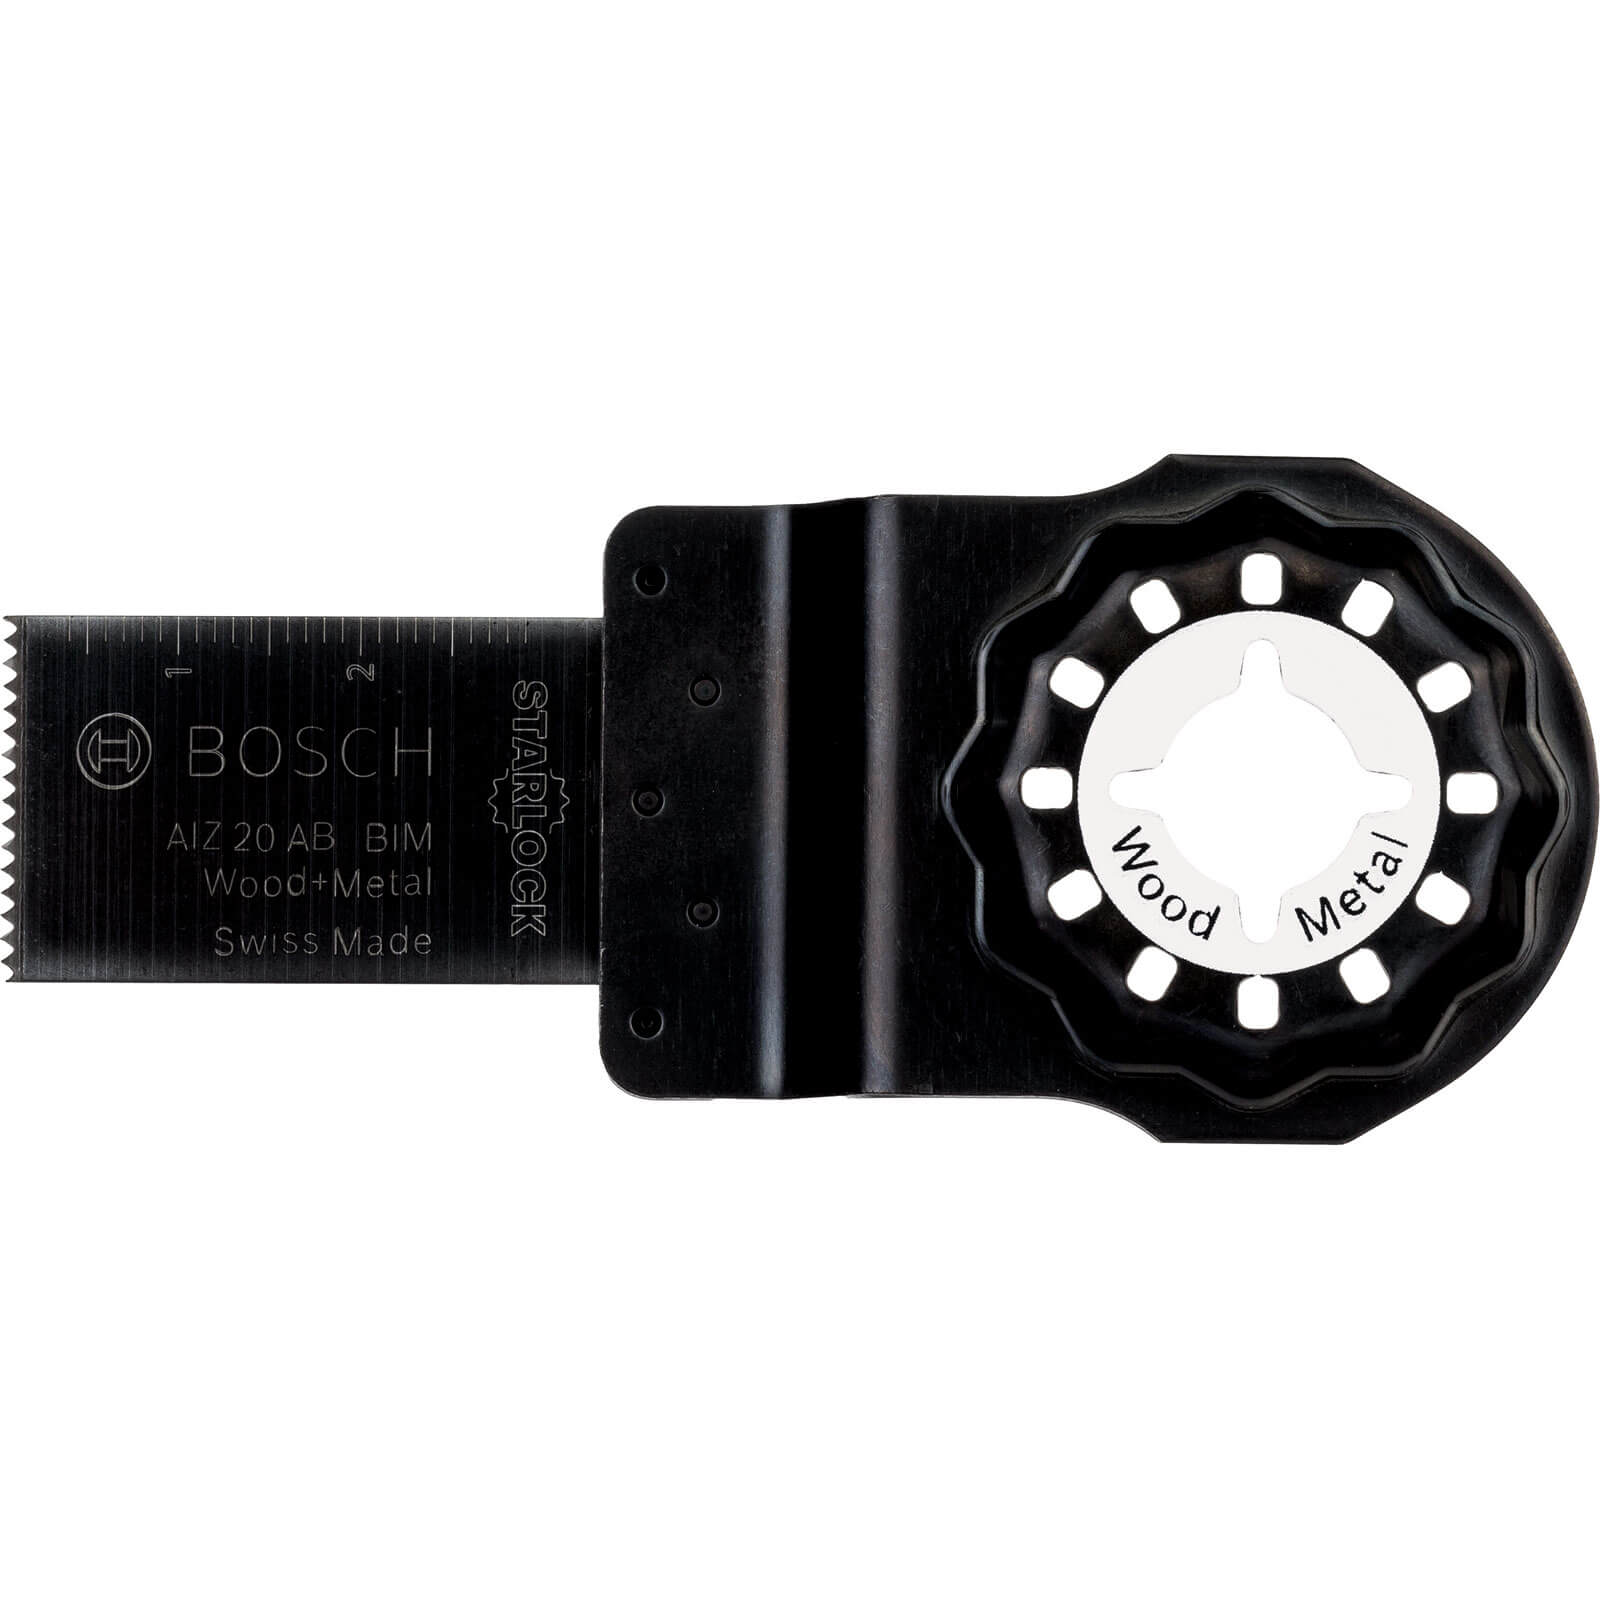 Bosch AIZ 20 AB Metal Oscillating Multi Tool Plunge Saw Blade 20mm Pack of 5